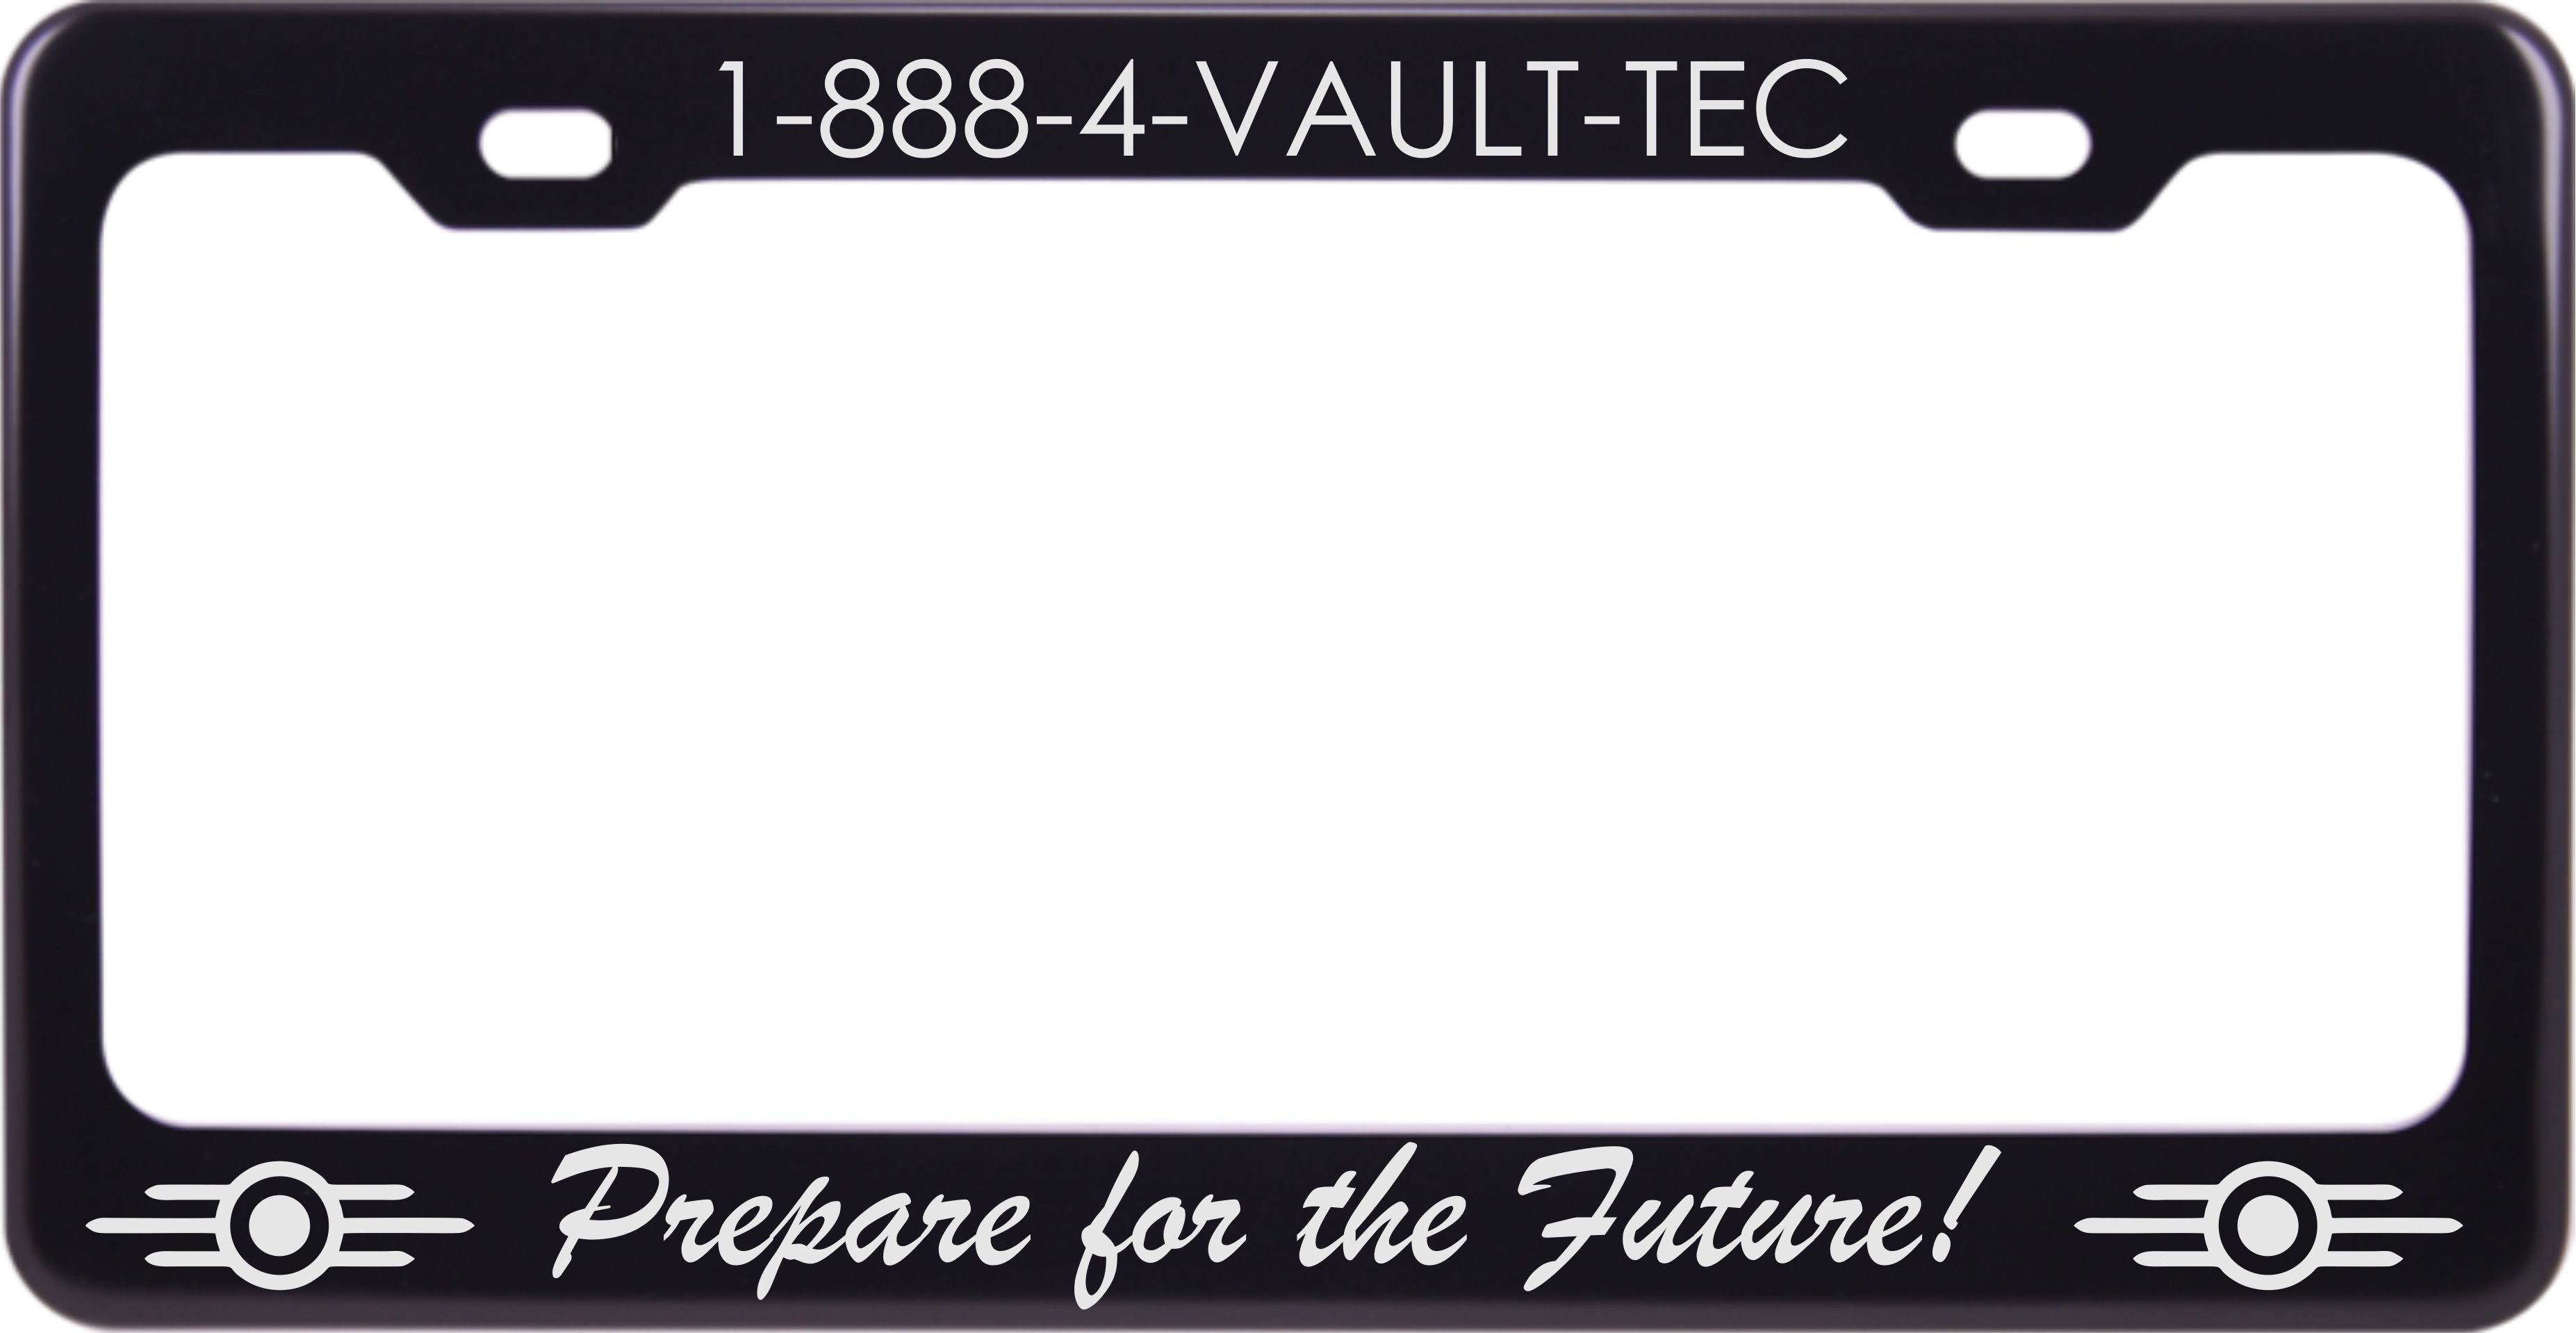 Vault-Tec Custom License Plate Frame Style - 2